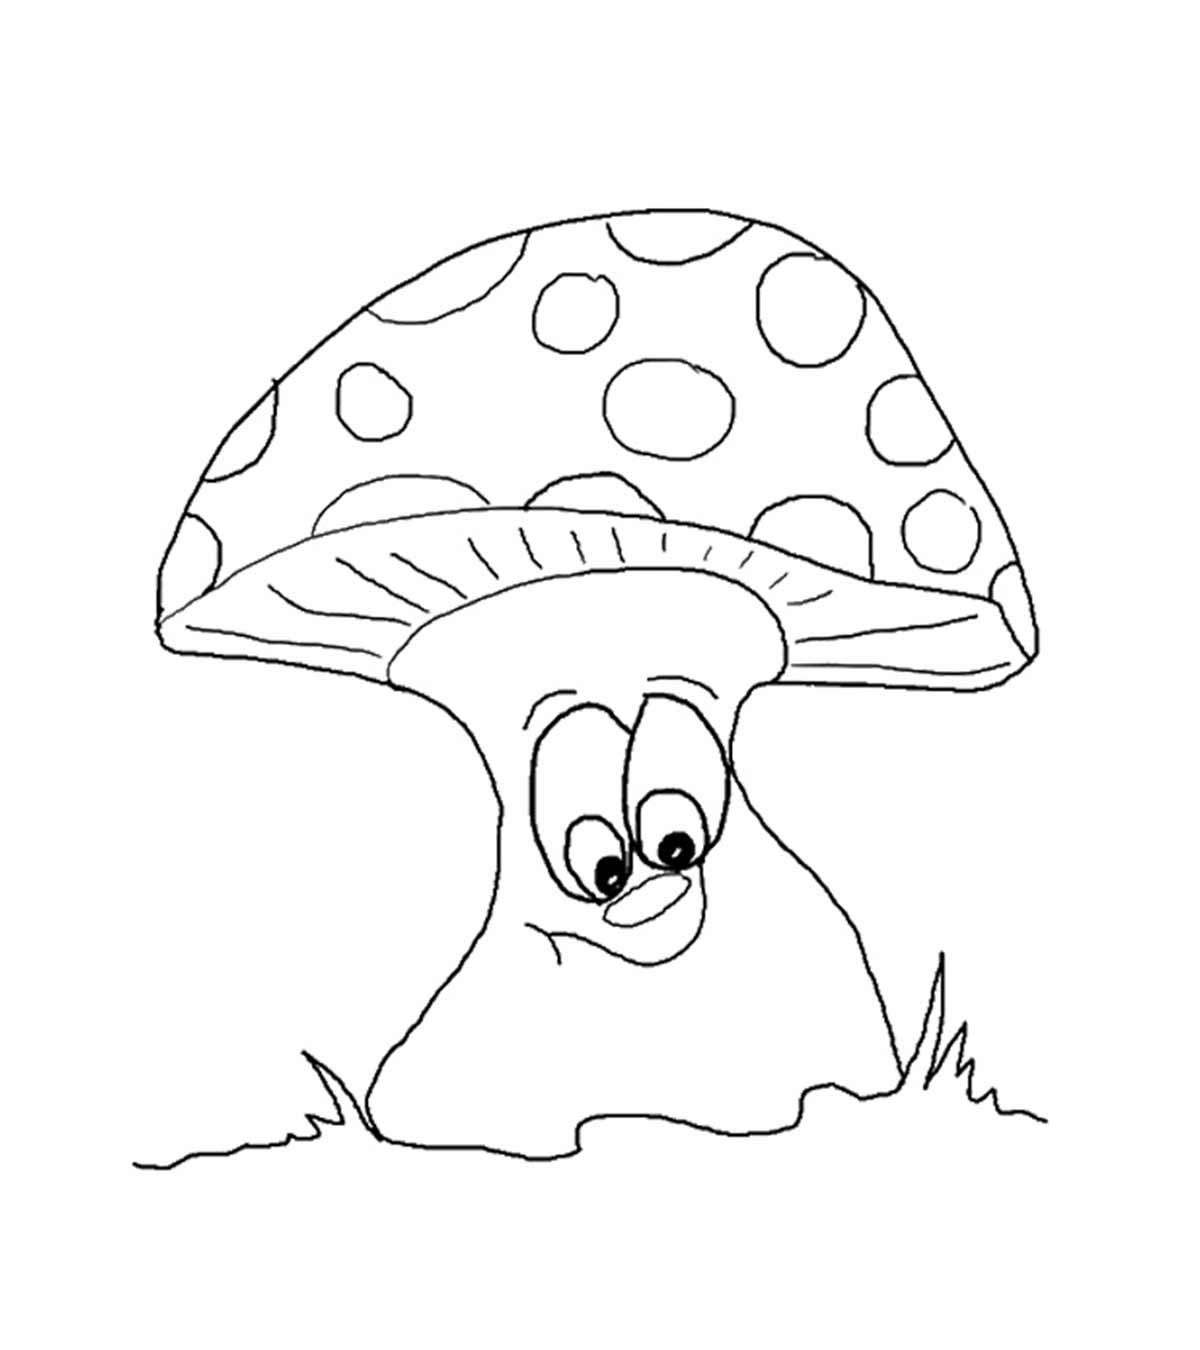 Top 25 Free Pritable Mushroom Coloring Pages Online